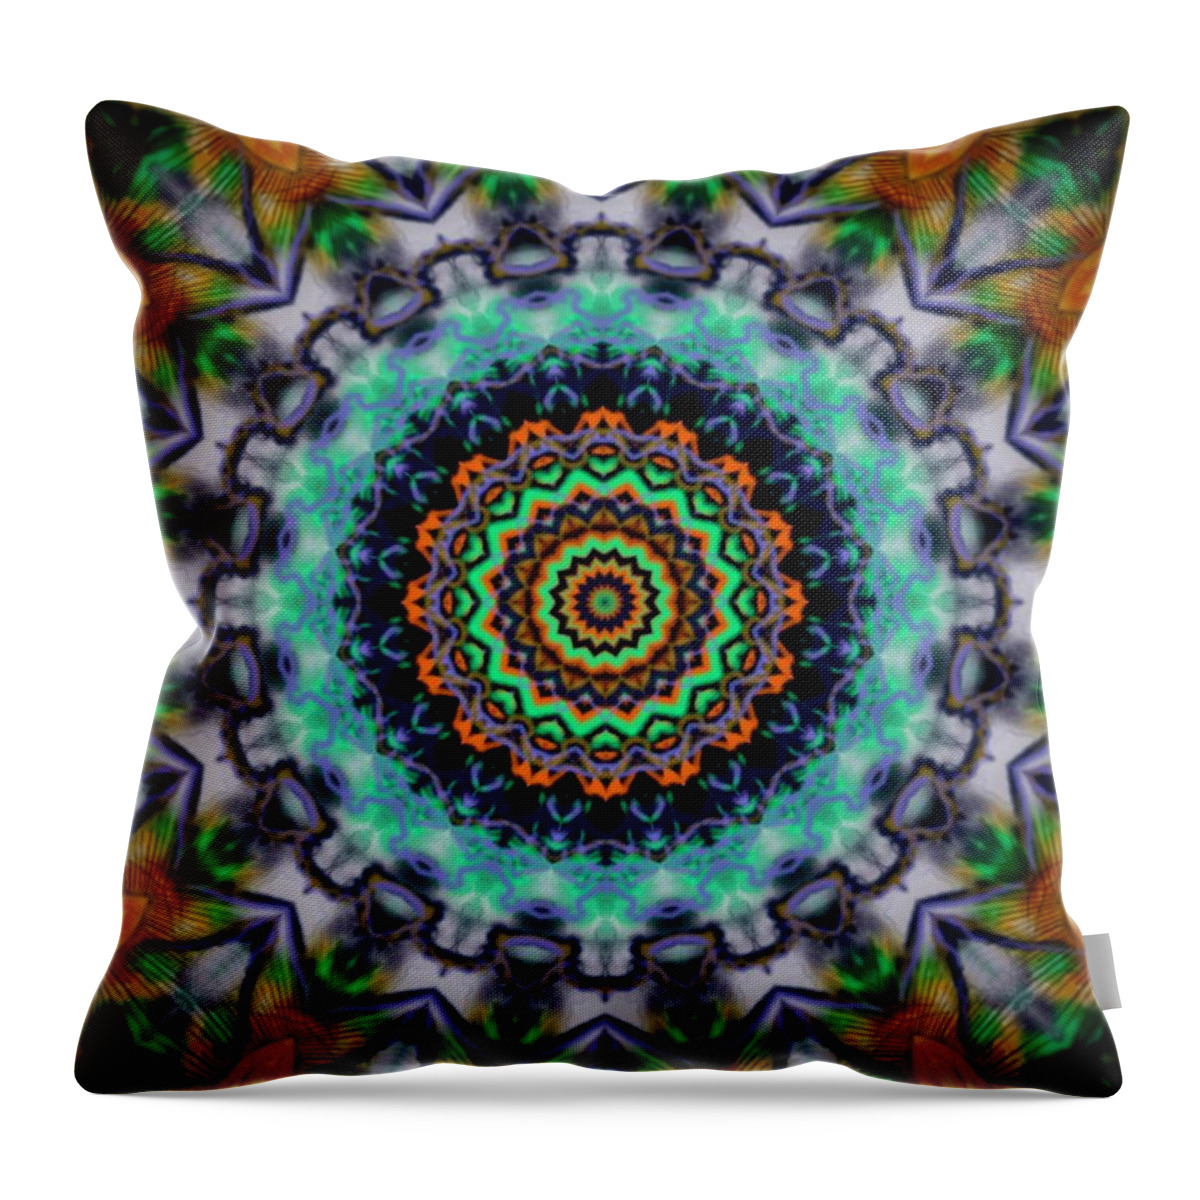 Mandala Throw Pillow featuring the digital art Electric Mandala by Angela Weddle